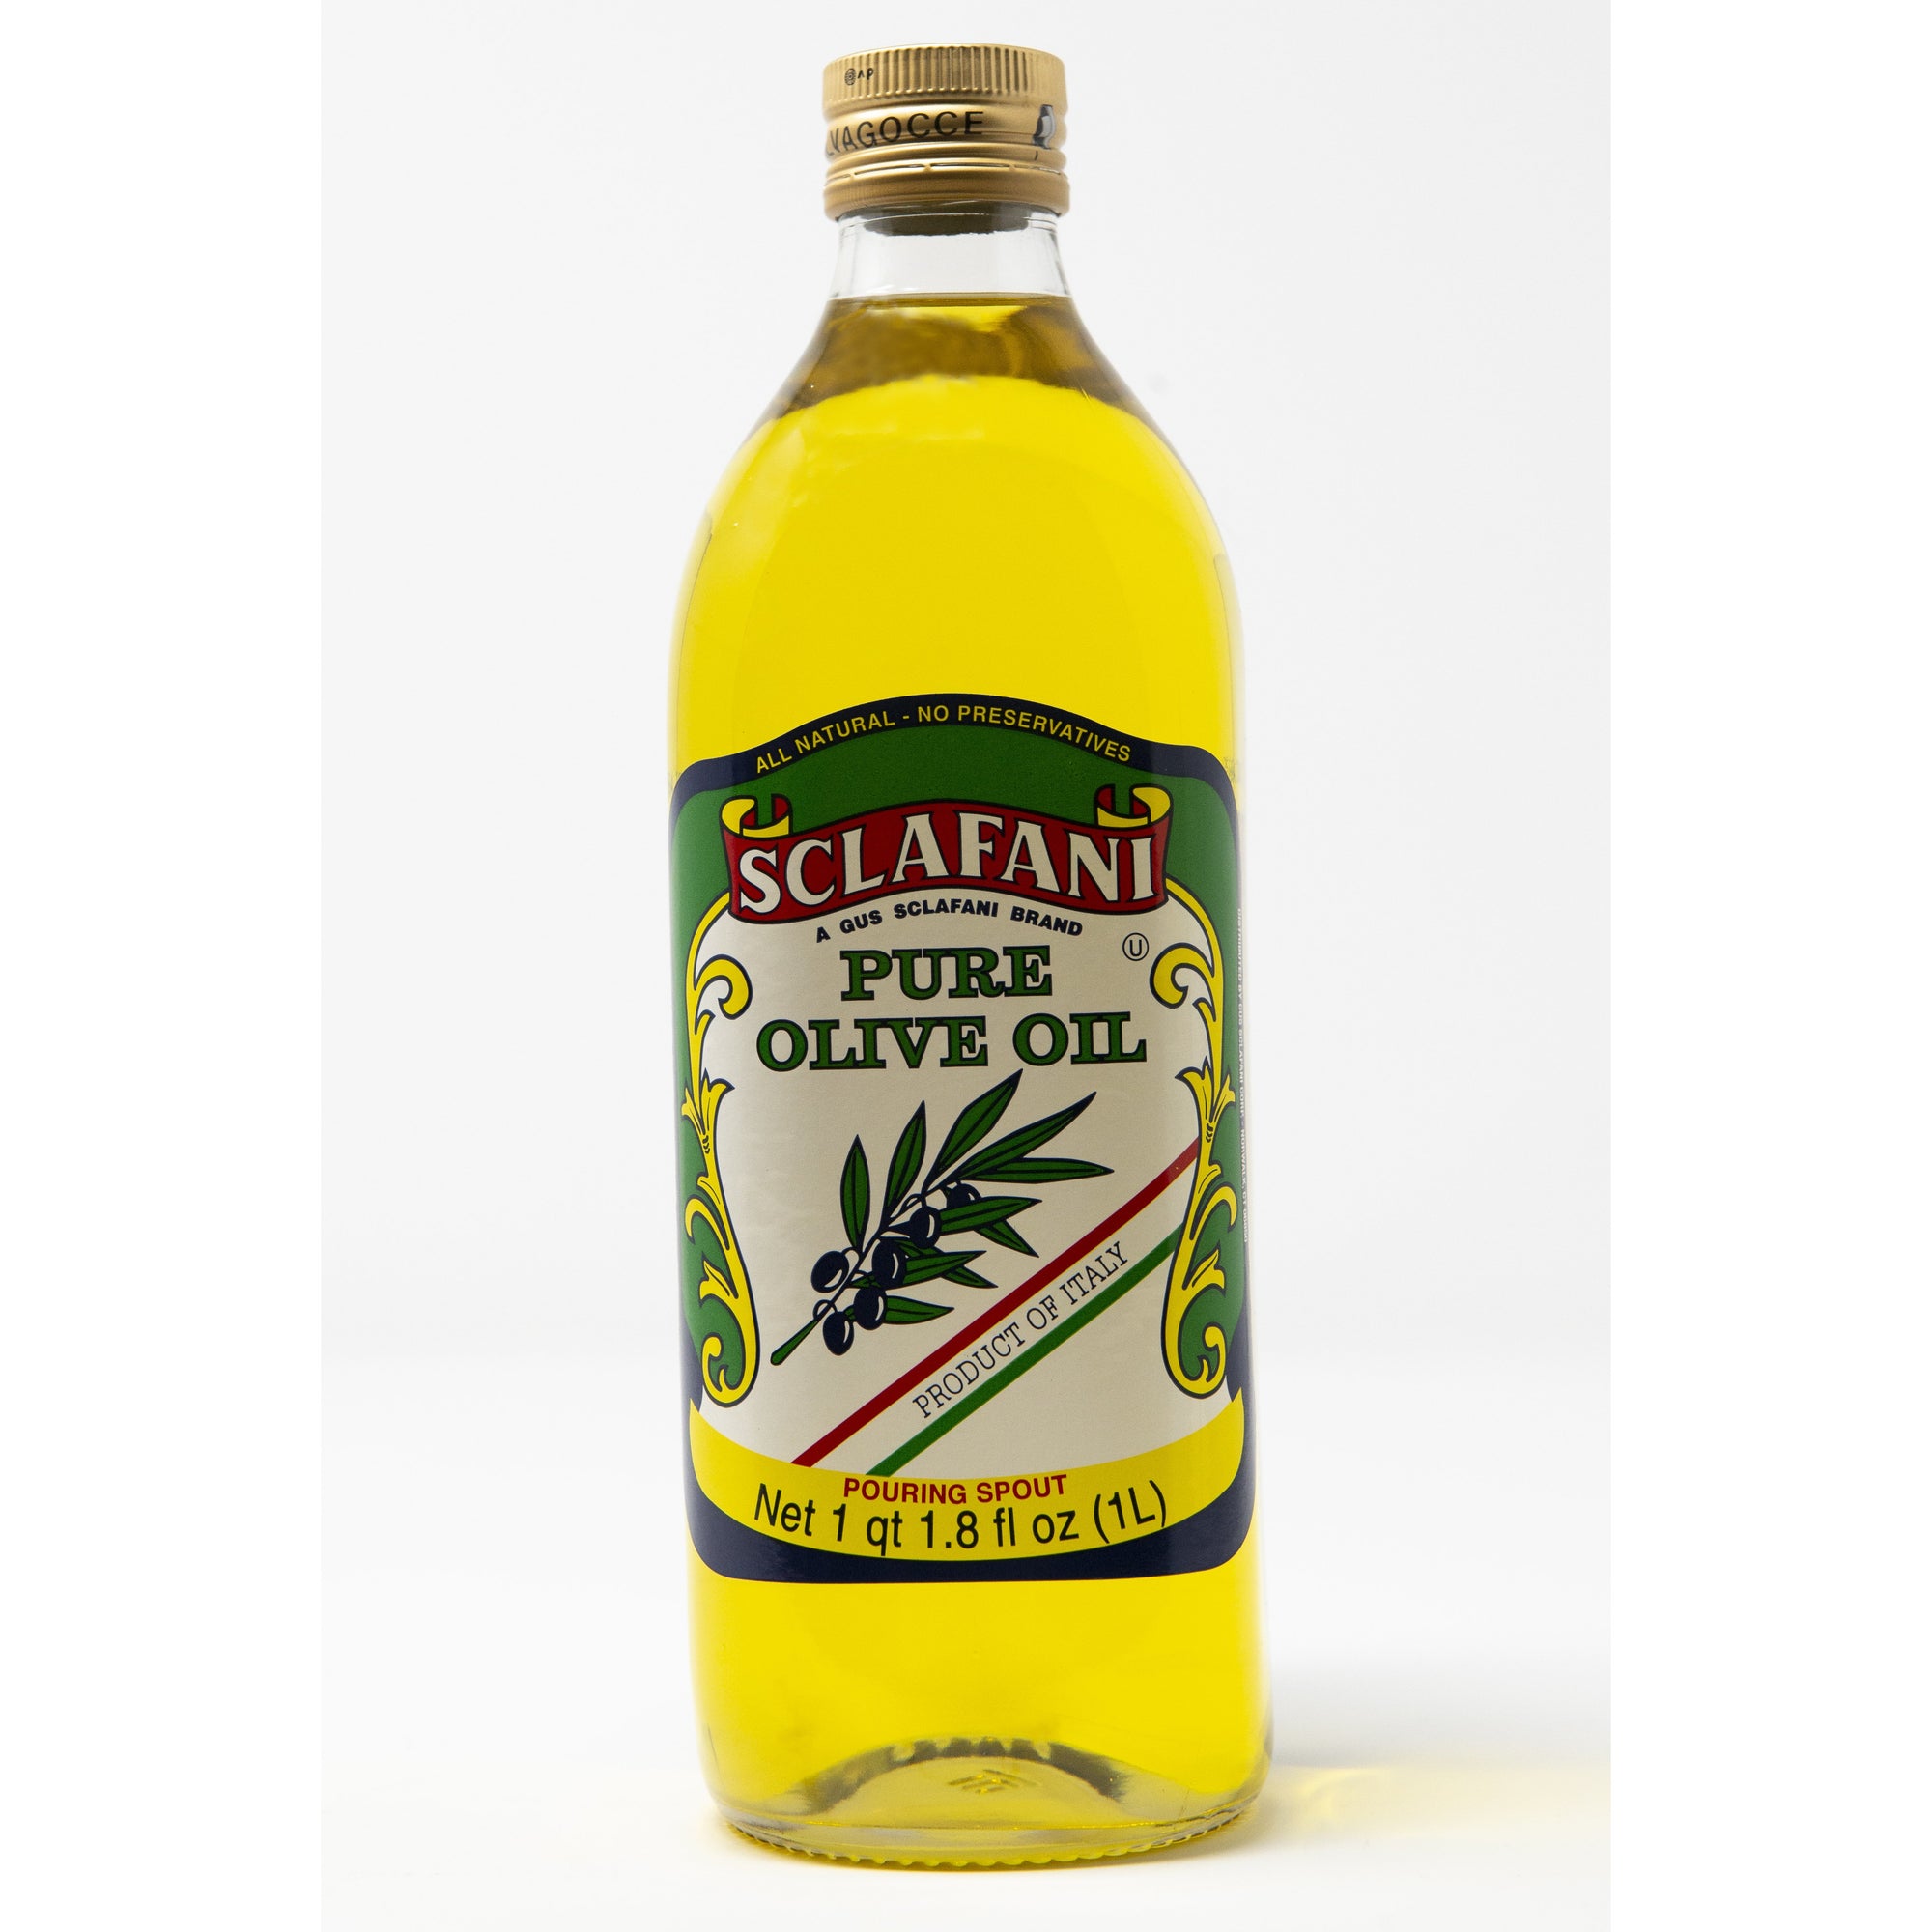 Sclafani Pure Olive Oil 17 oz 500mL